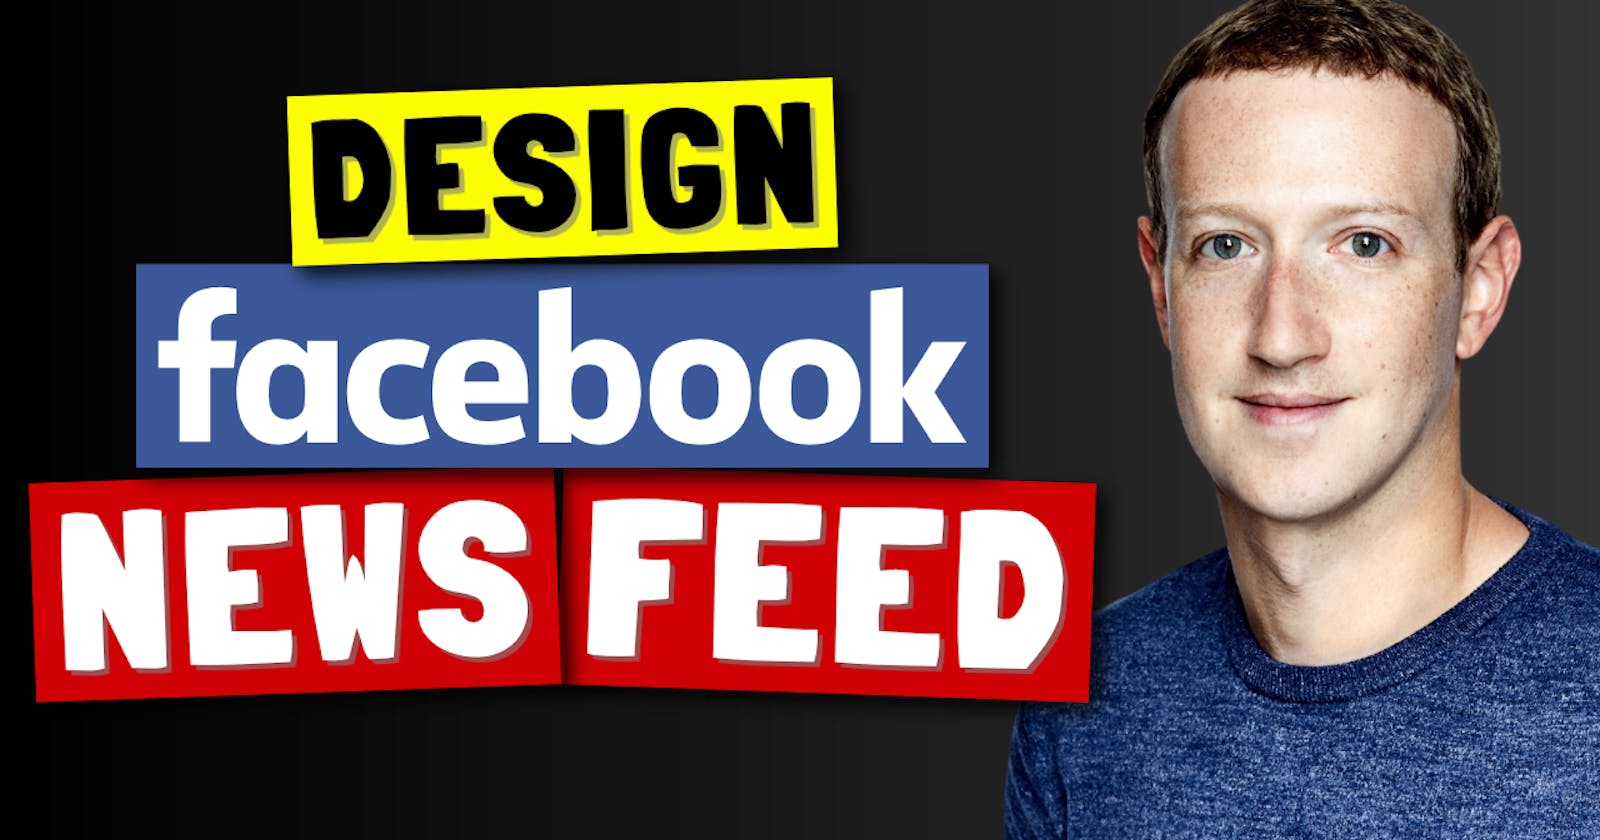 Design Facebook News Feed | Instagram | Twitter | System Design & Architecture